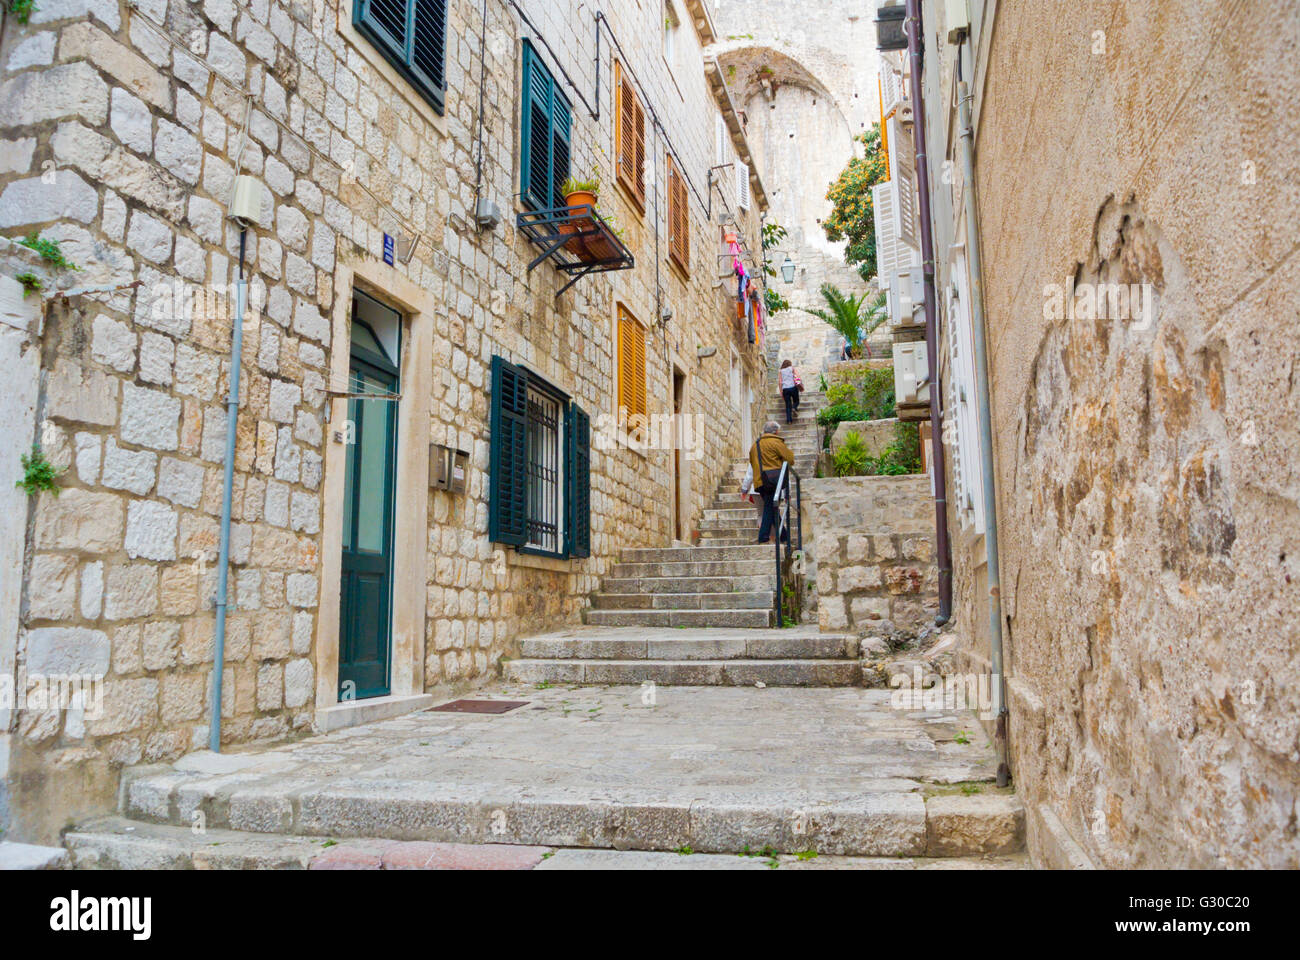 Ispod Mincete, street near Minceta tower, Grad, the old town, Dubrovnik, Dalmatia, Croatia Stock Photo